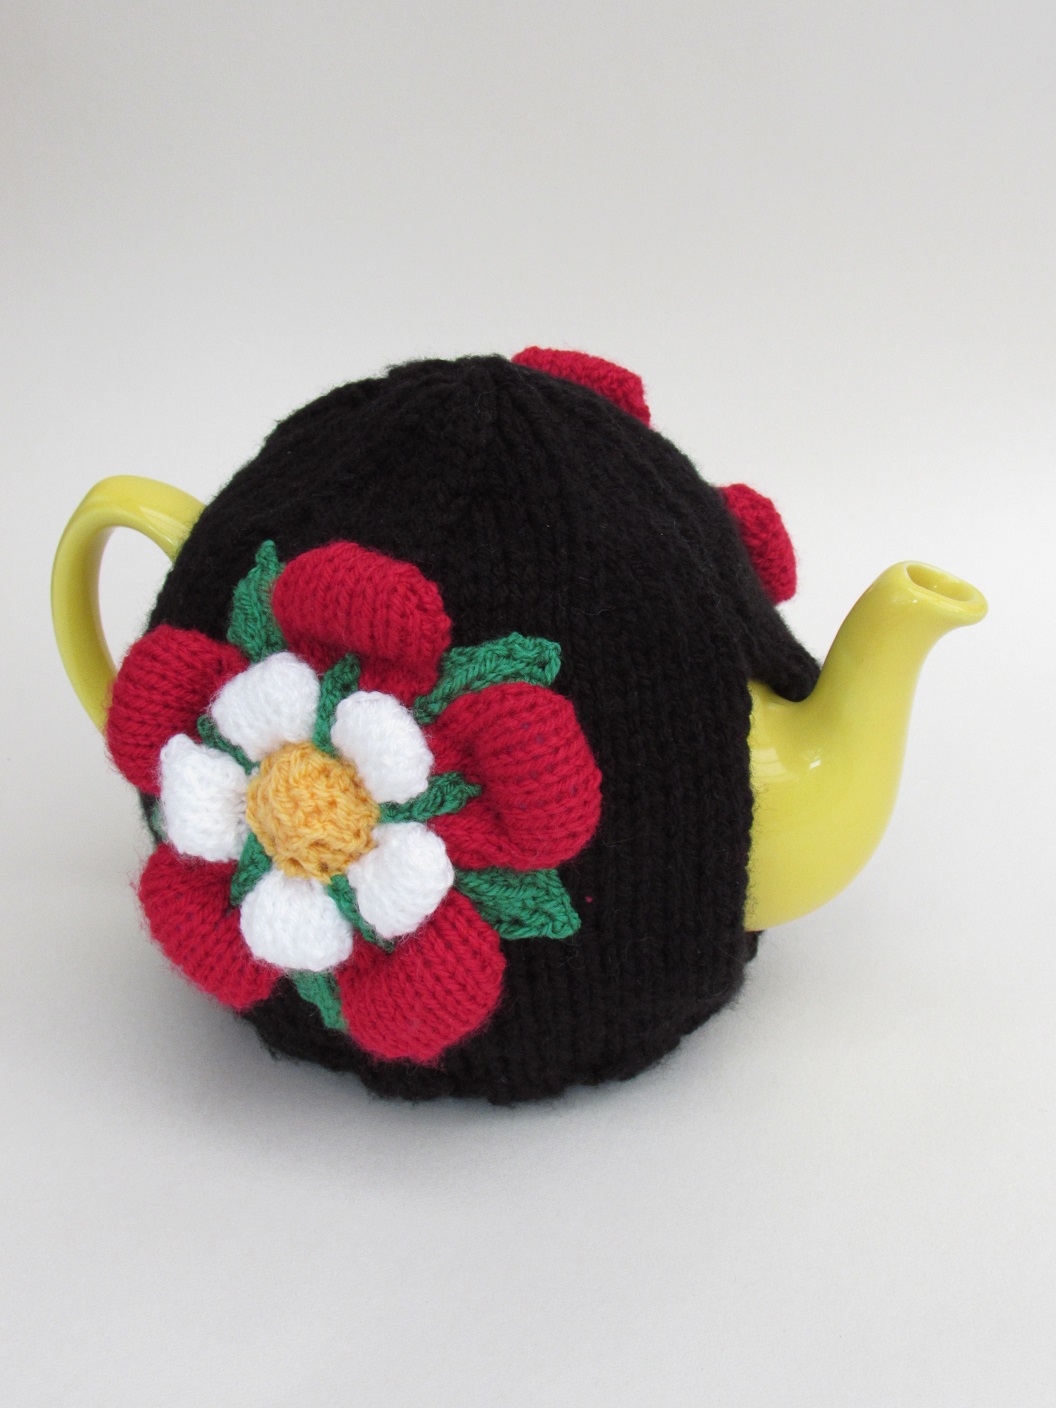 Tudor Rose knitting pattern